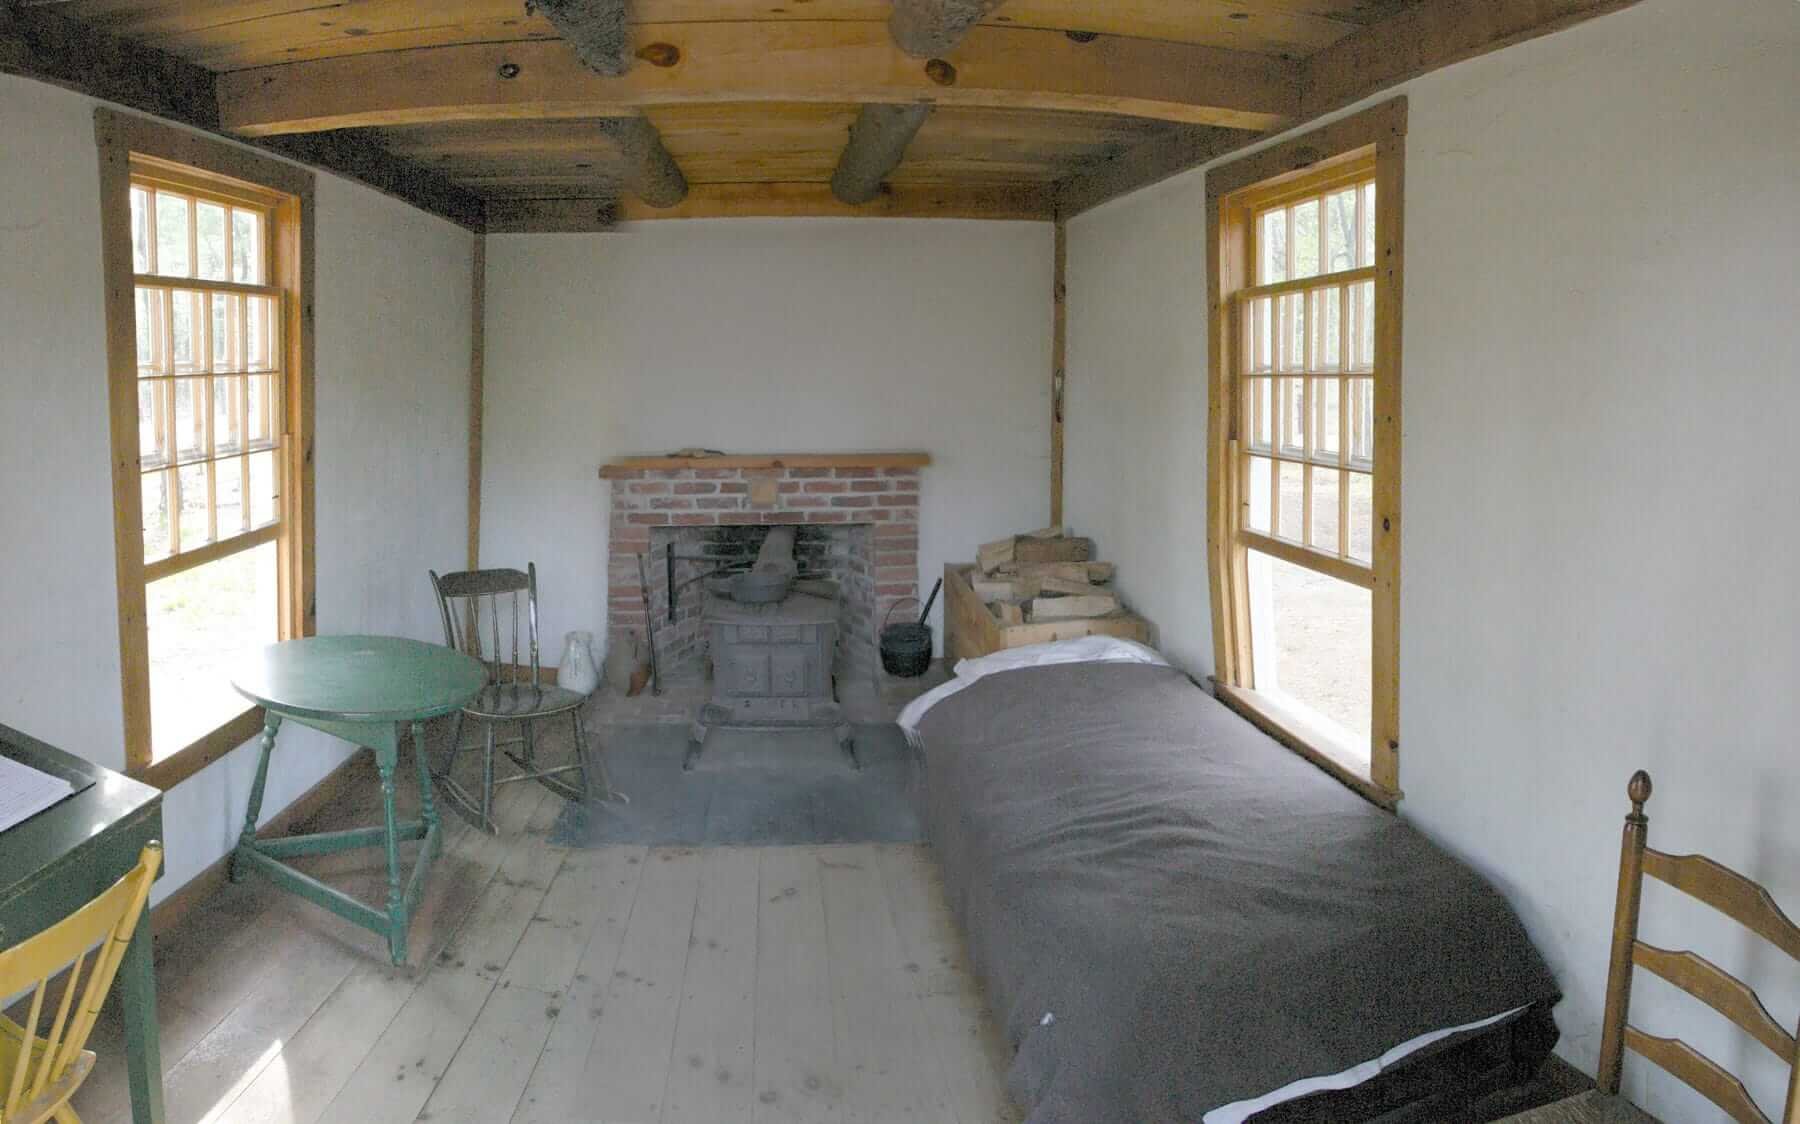 Henry David Thoreaus simple hytte ved dammen. Foto: wikipedia.org